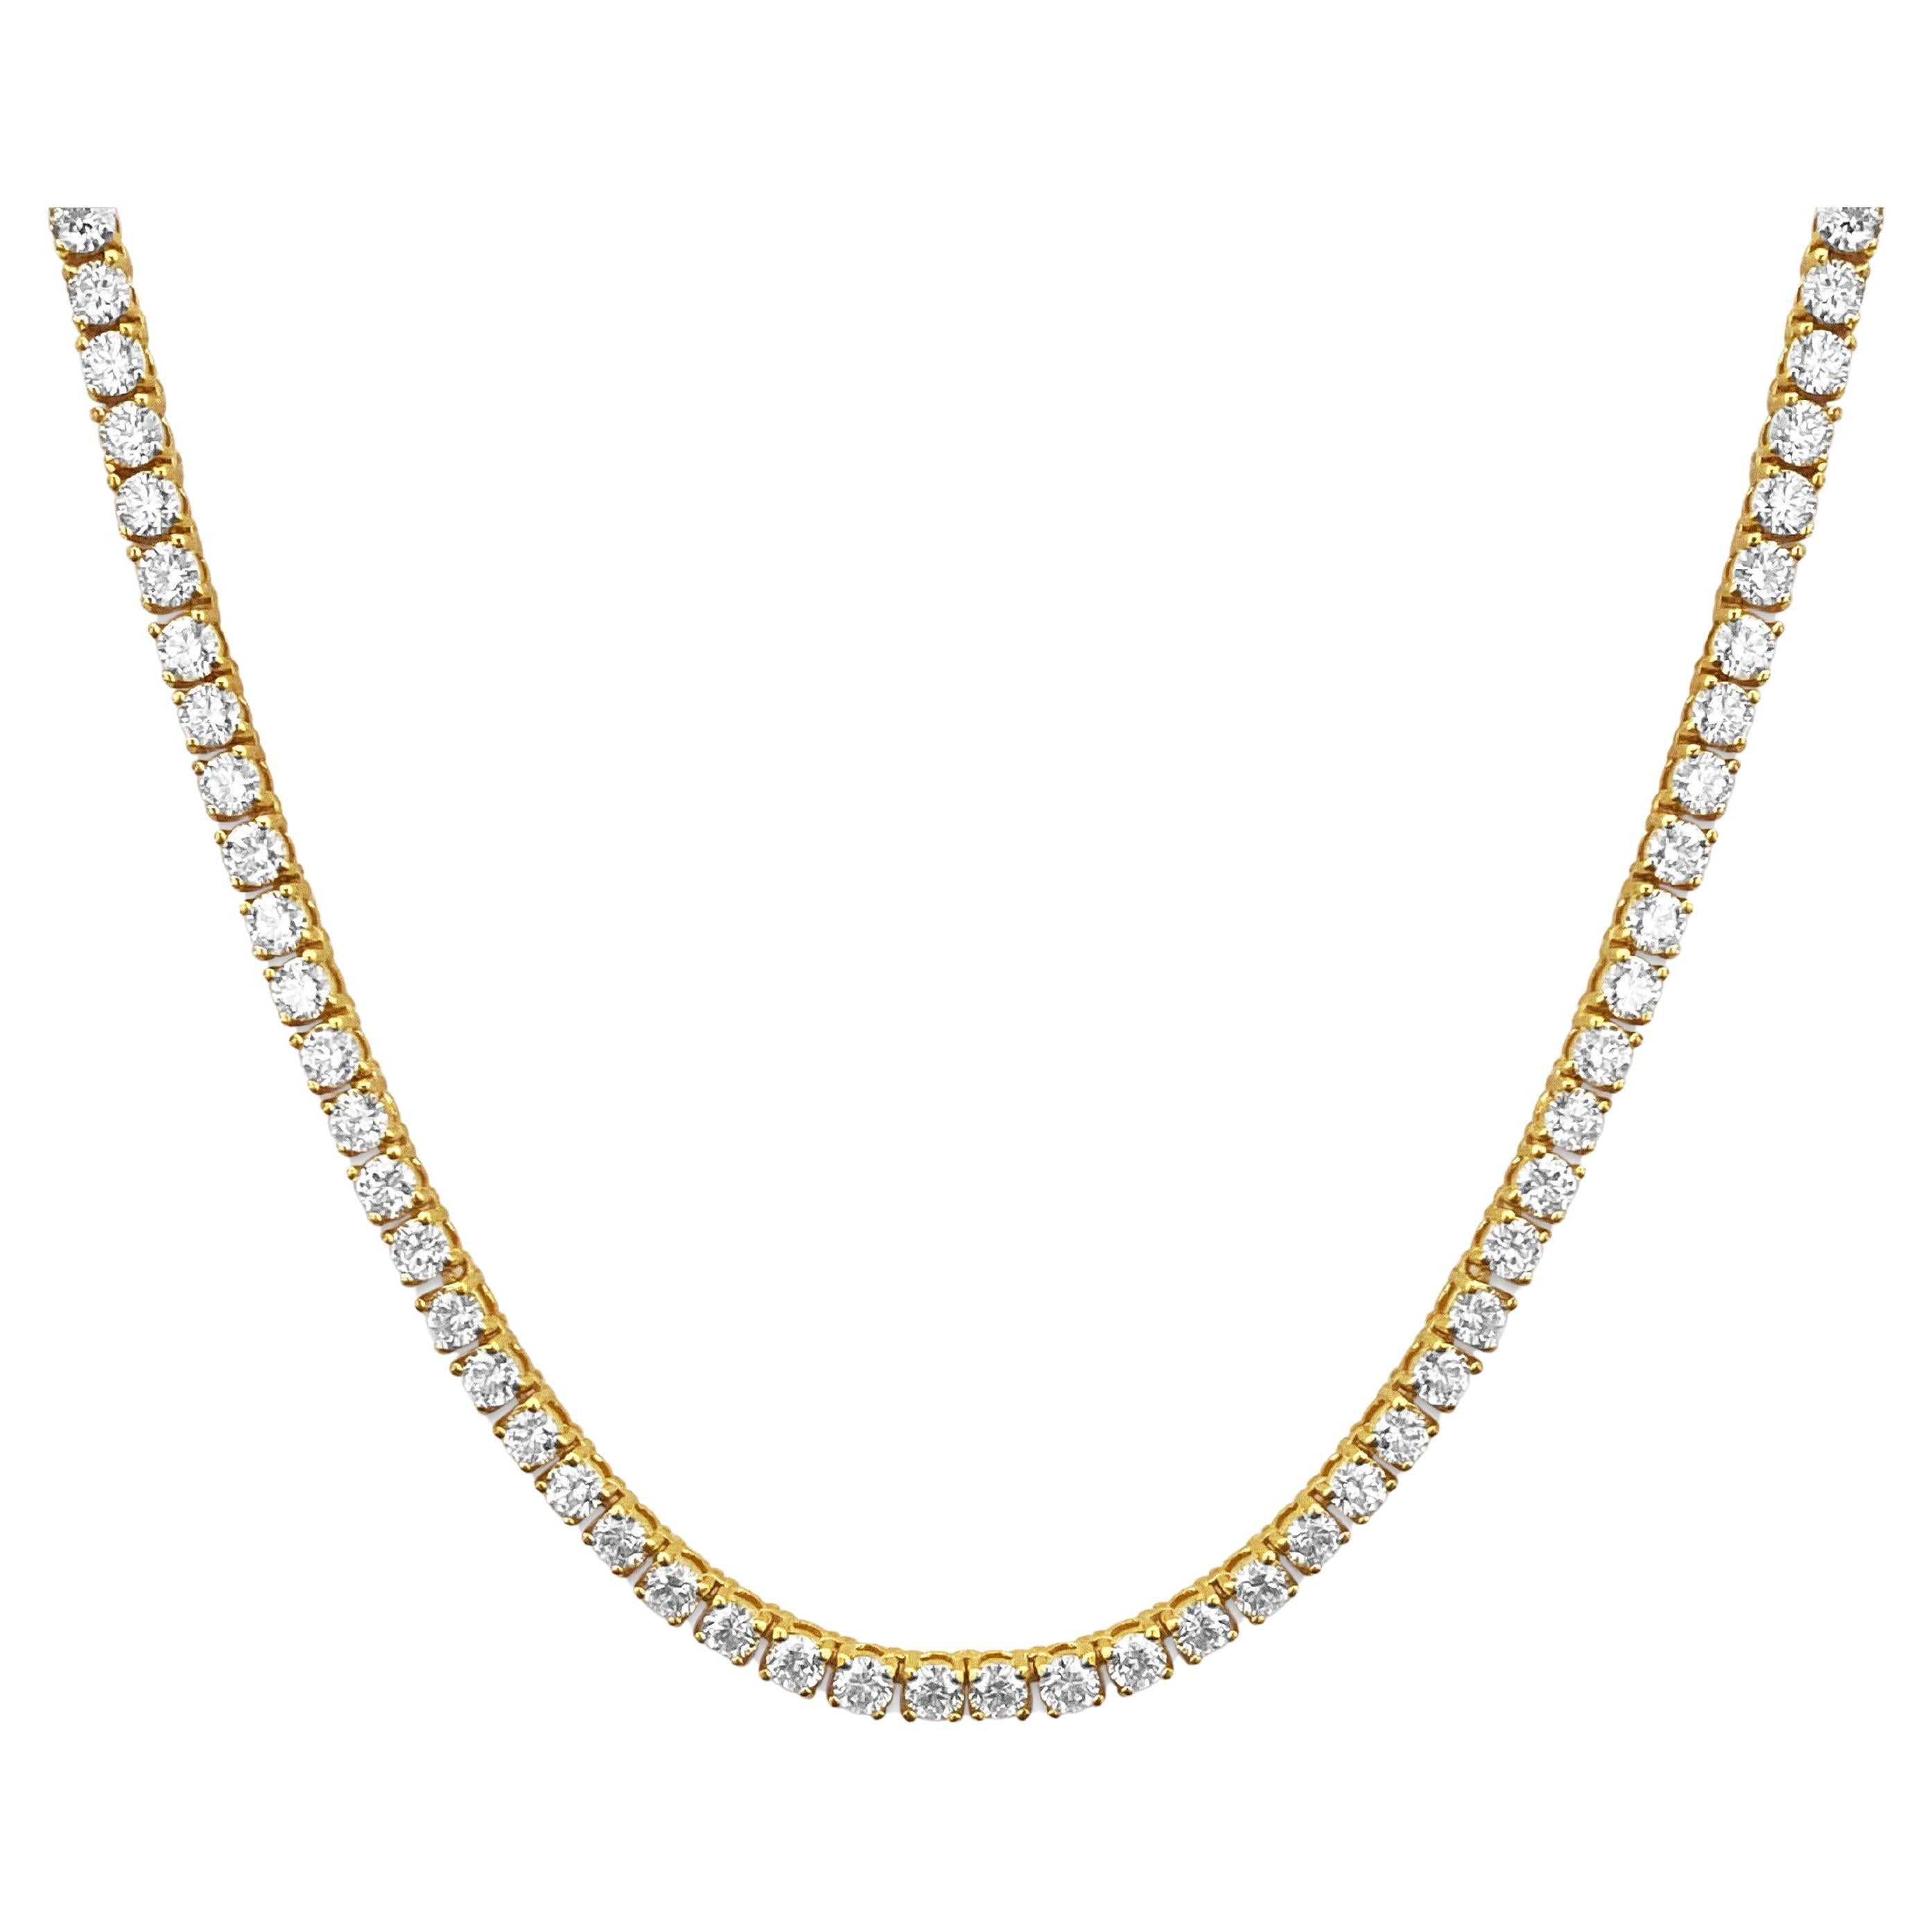 18 Carat VVS Diamond Tennis Necklace 14k Gold